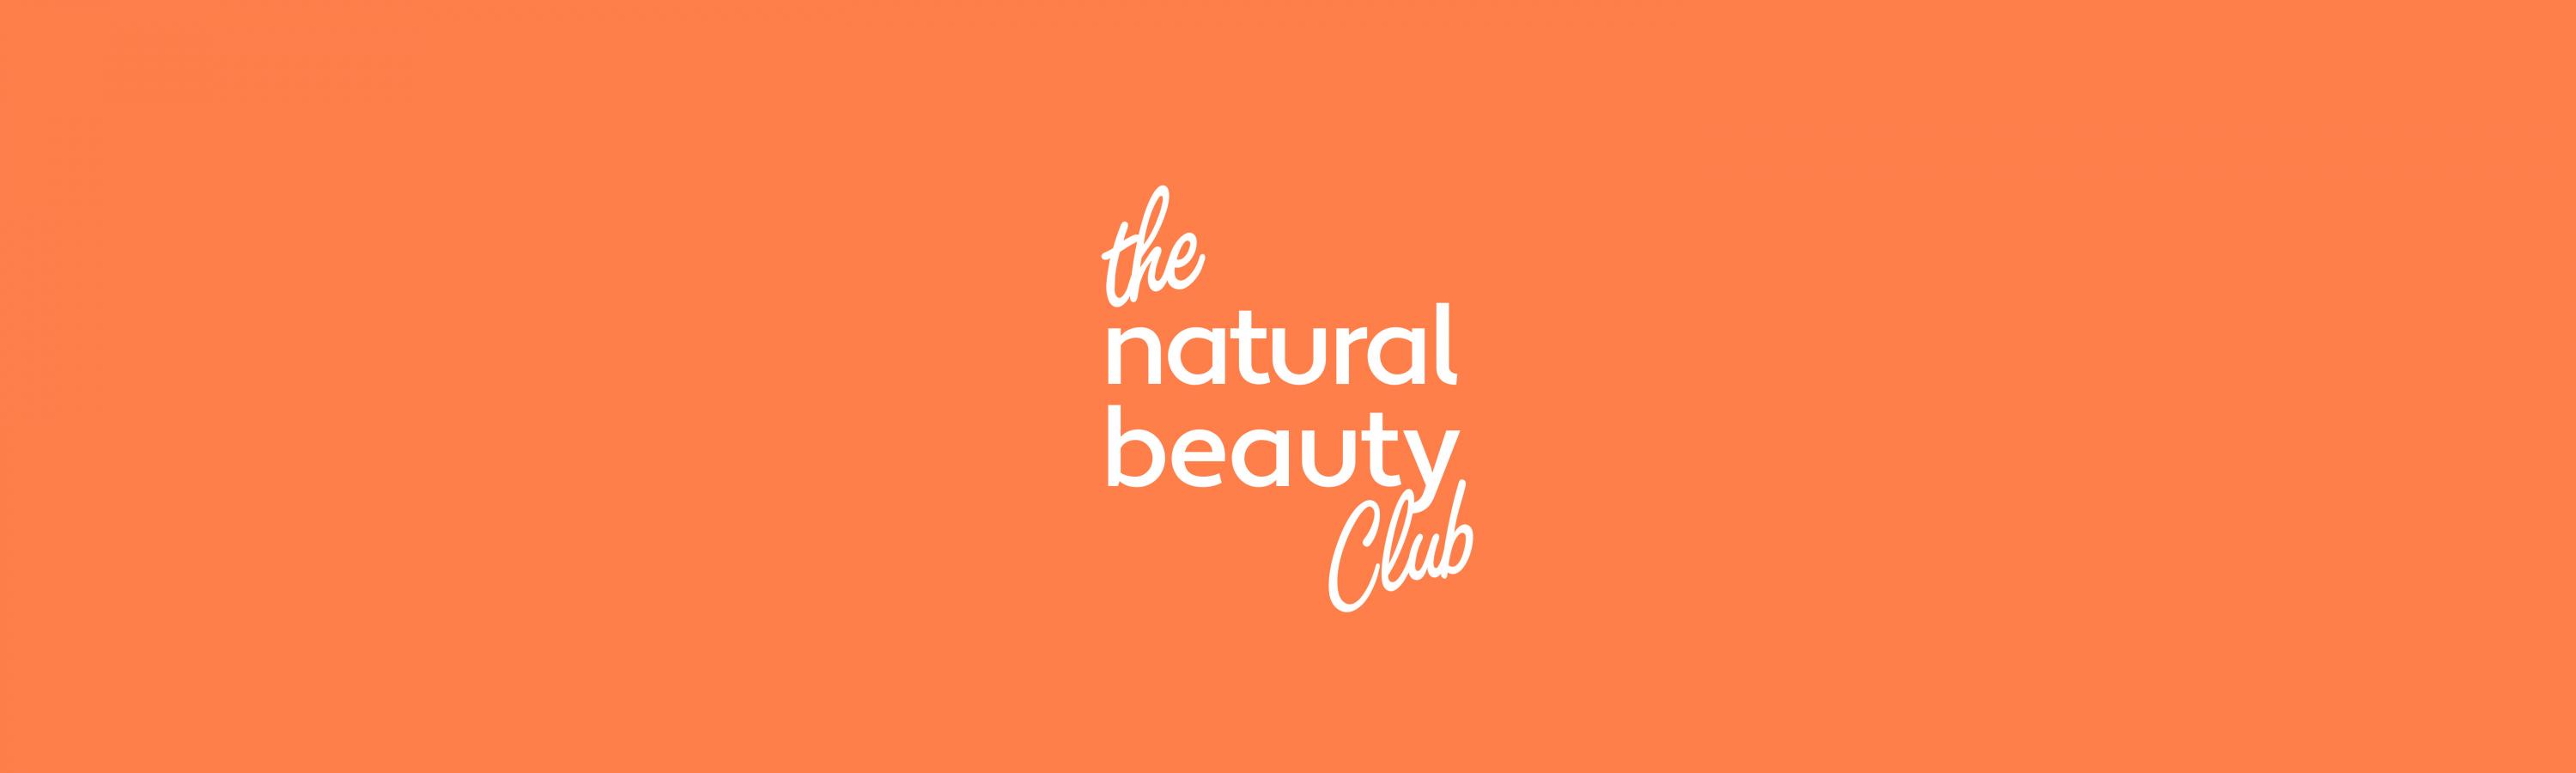 the natural beauty logo